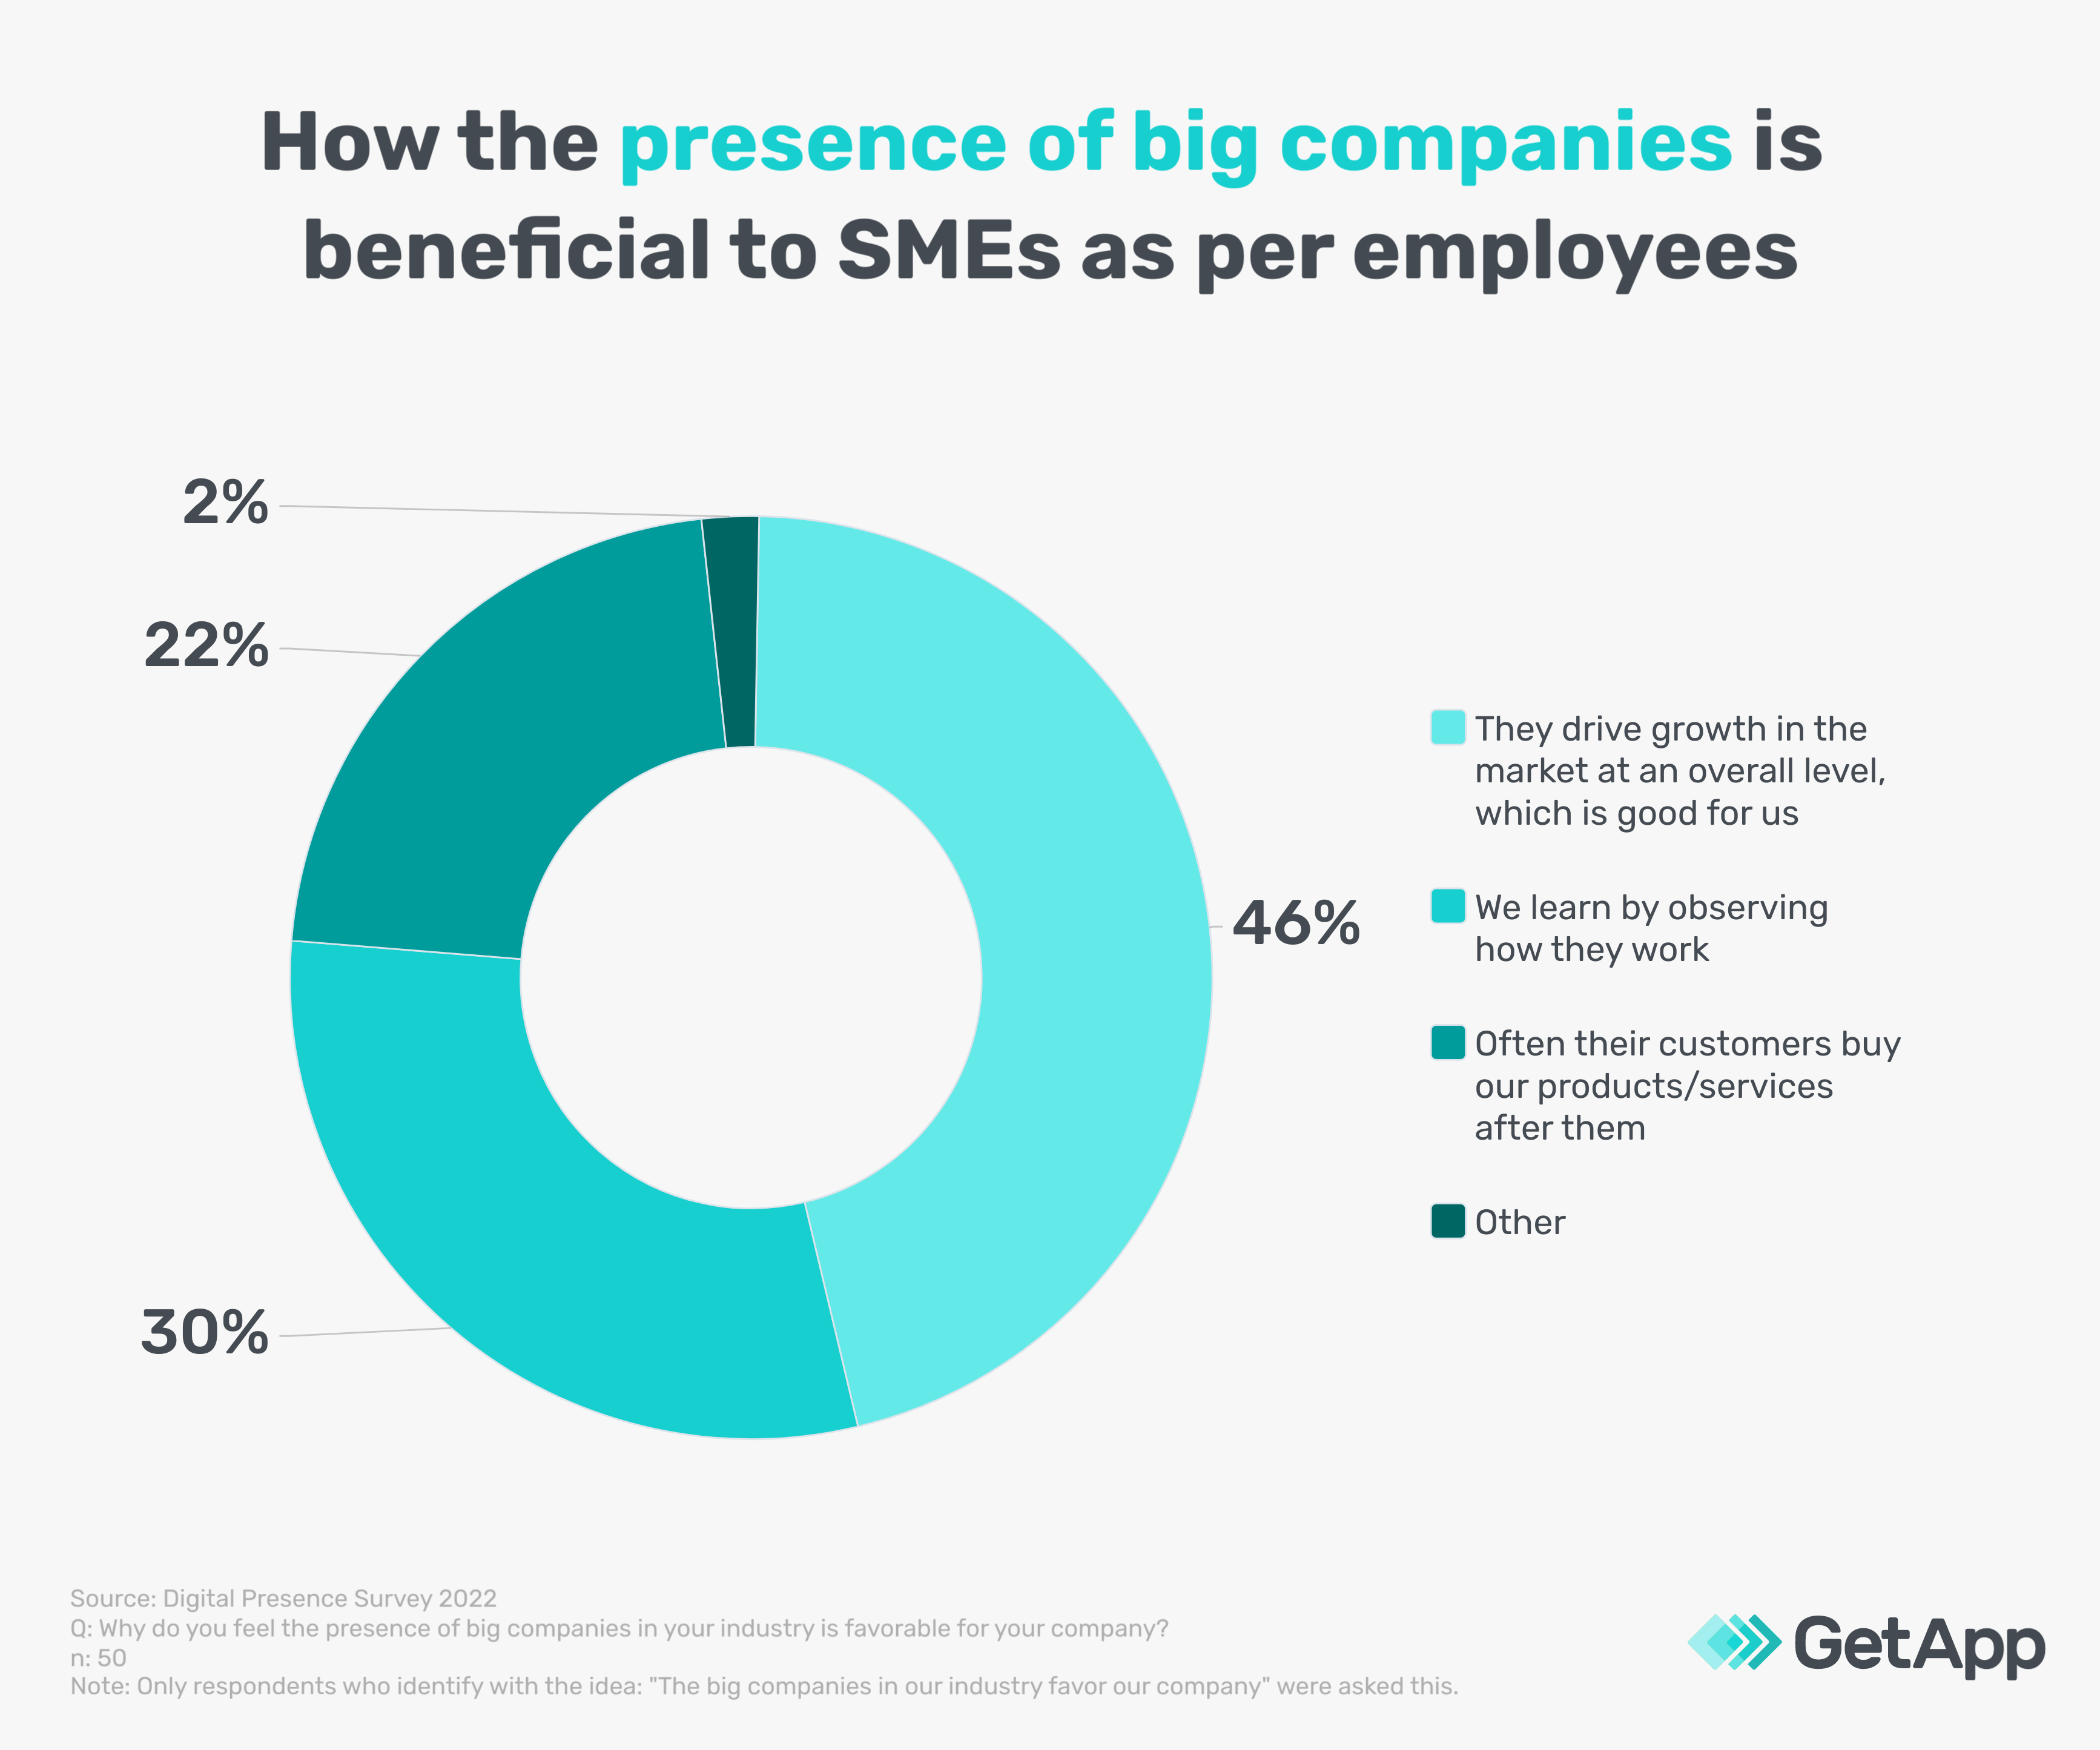 SMEs vs larger enterprises and benefits